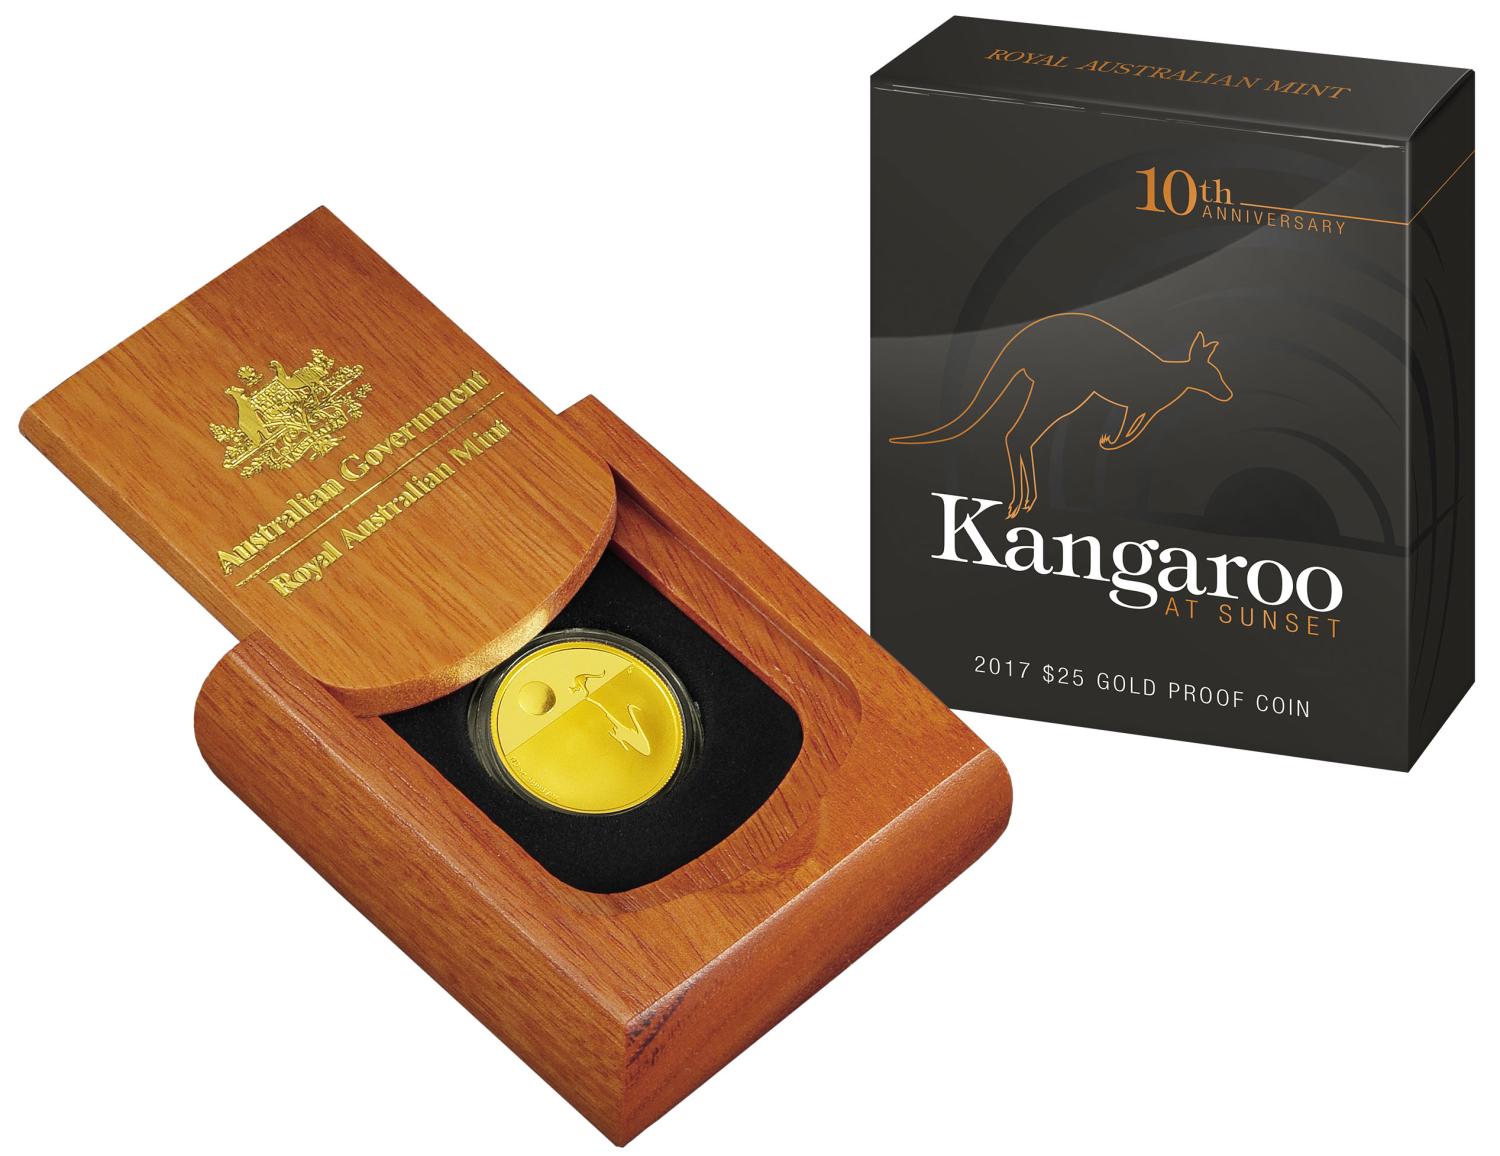 Thumbnail for 2017 $25 Gold Proof Coin - Kangaroo at Sunset